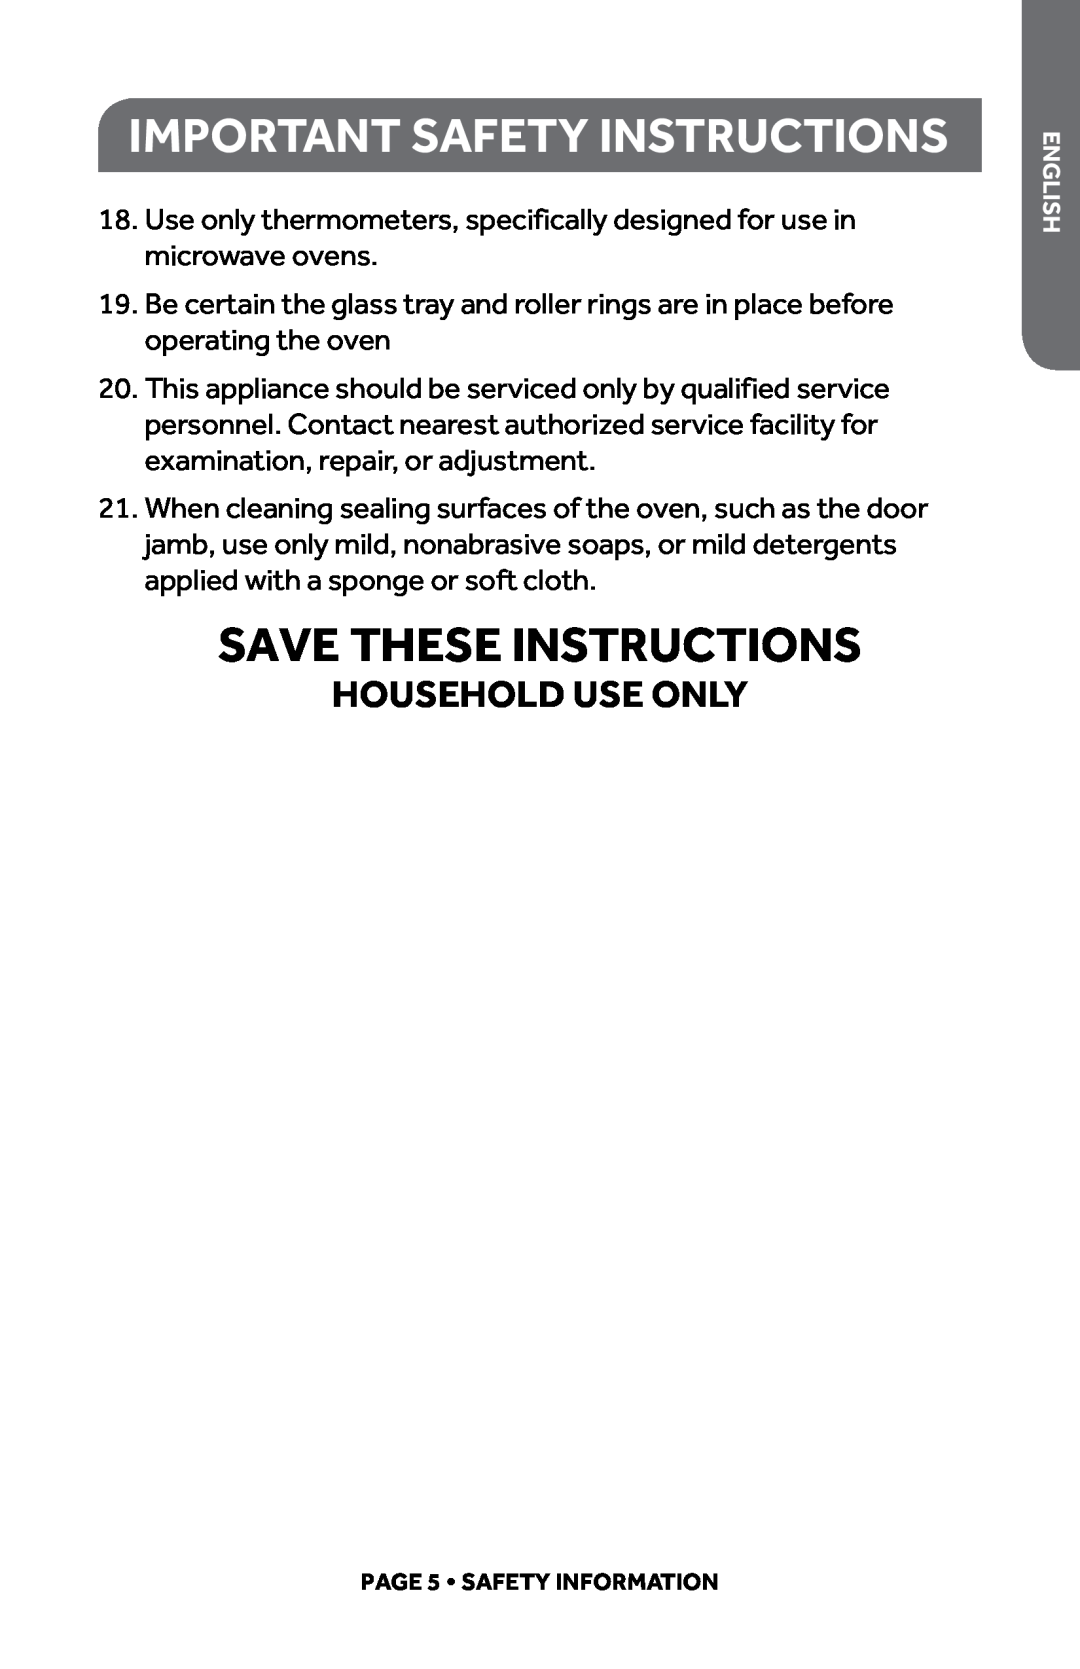 Haier HMC935SESS, HMC0903SESS, HMC920BEBB Save These Instructions, Household Use Only, important safety instructions 